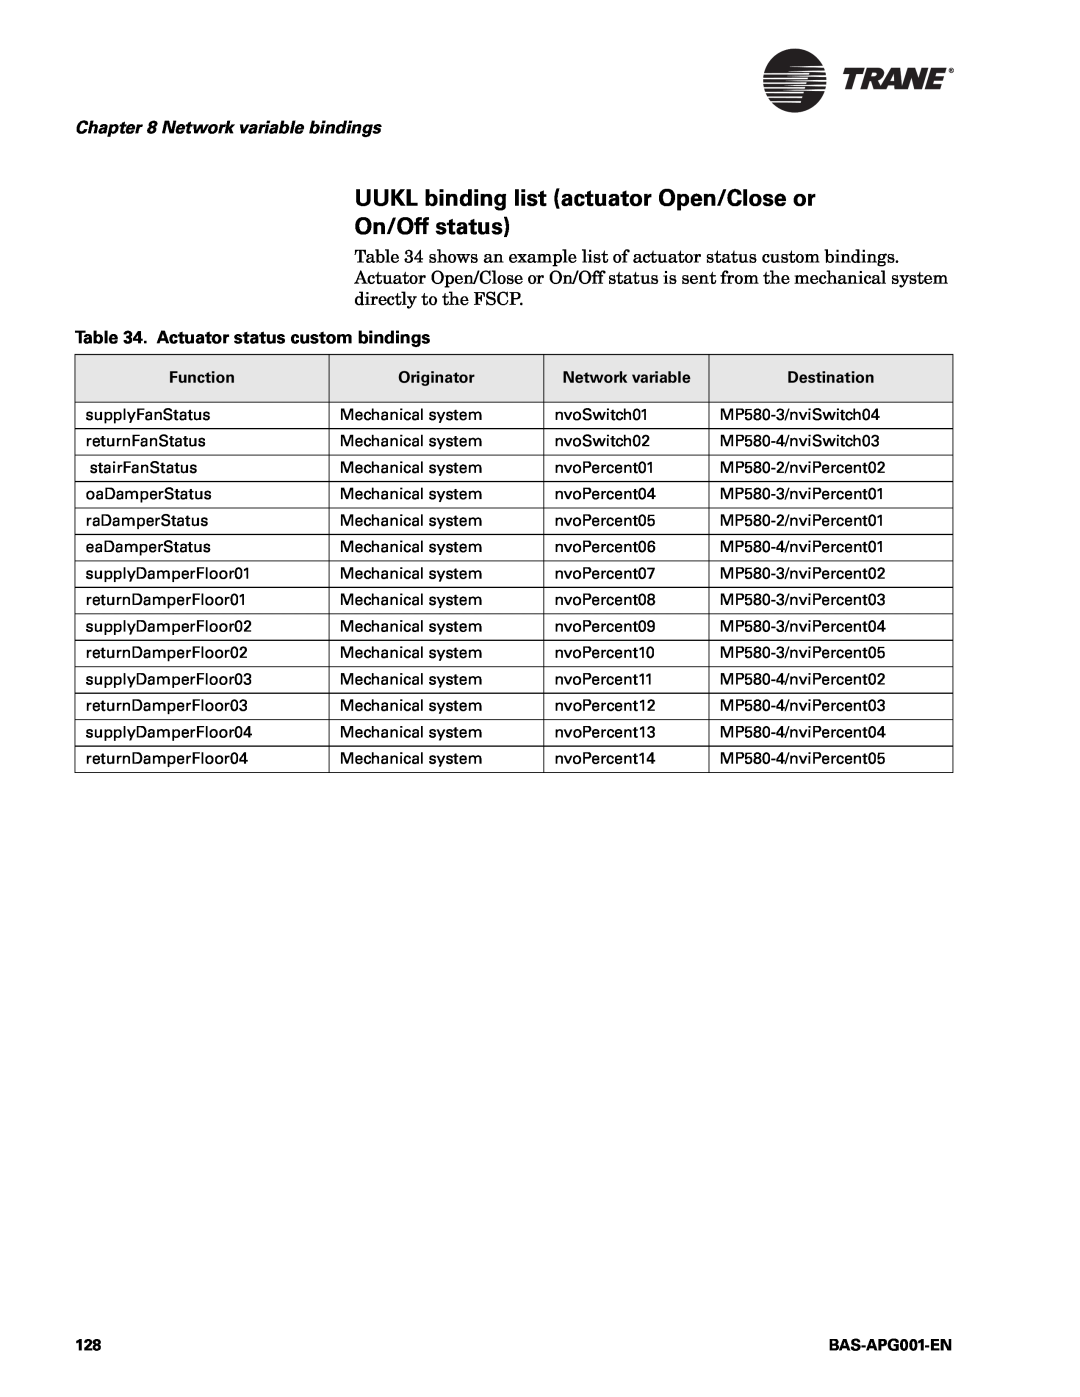 Trane BAS-APG001-EN manual UUKL binding list actuator Open/Close or, On/Off status, Network variable bindings 